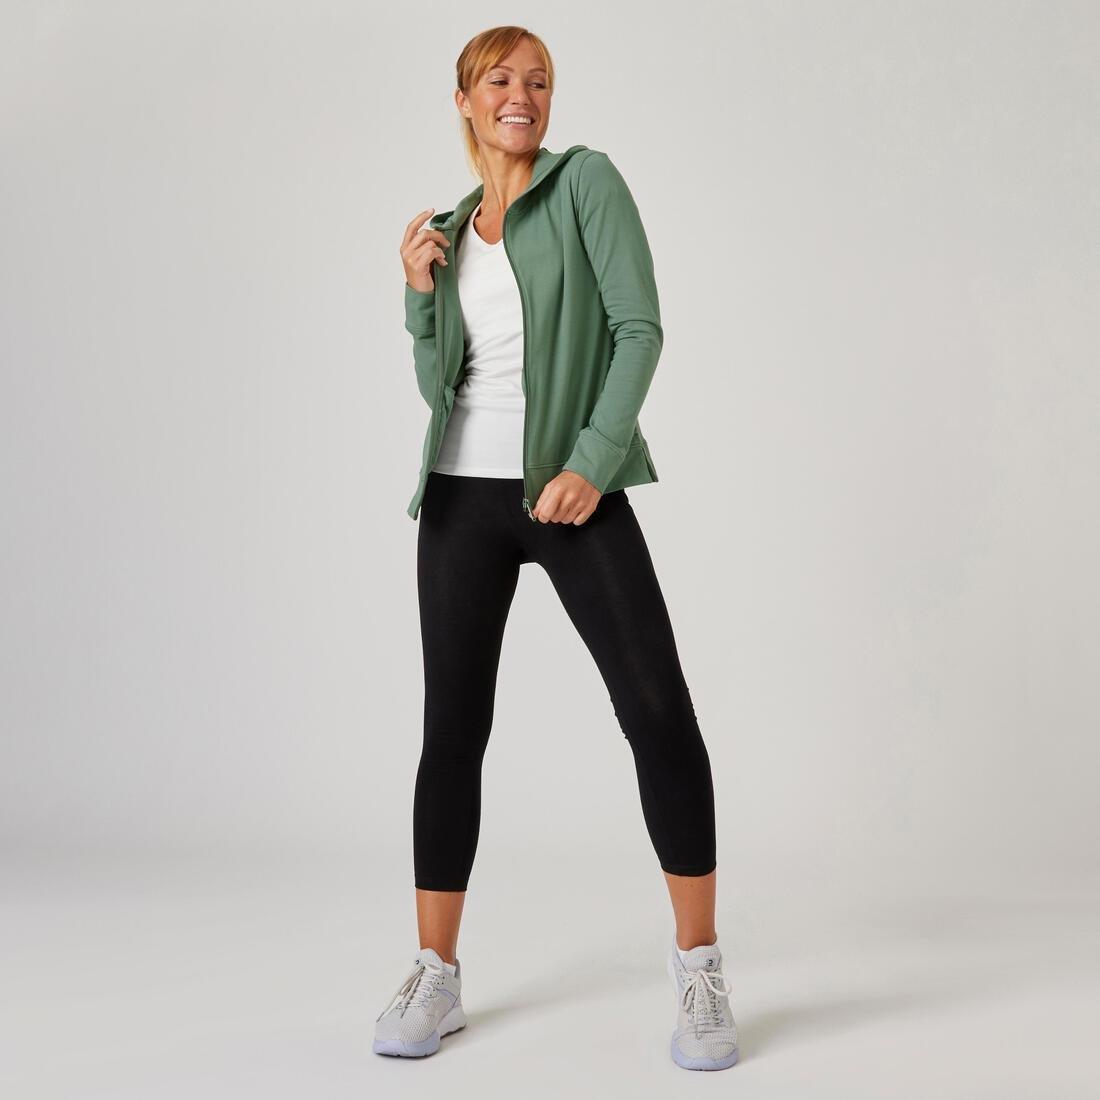 DOMYOS - Womens Zip-Up Fitness Hoodie 500, Green